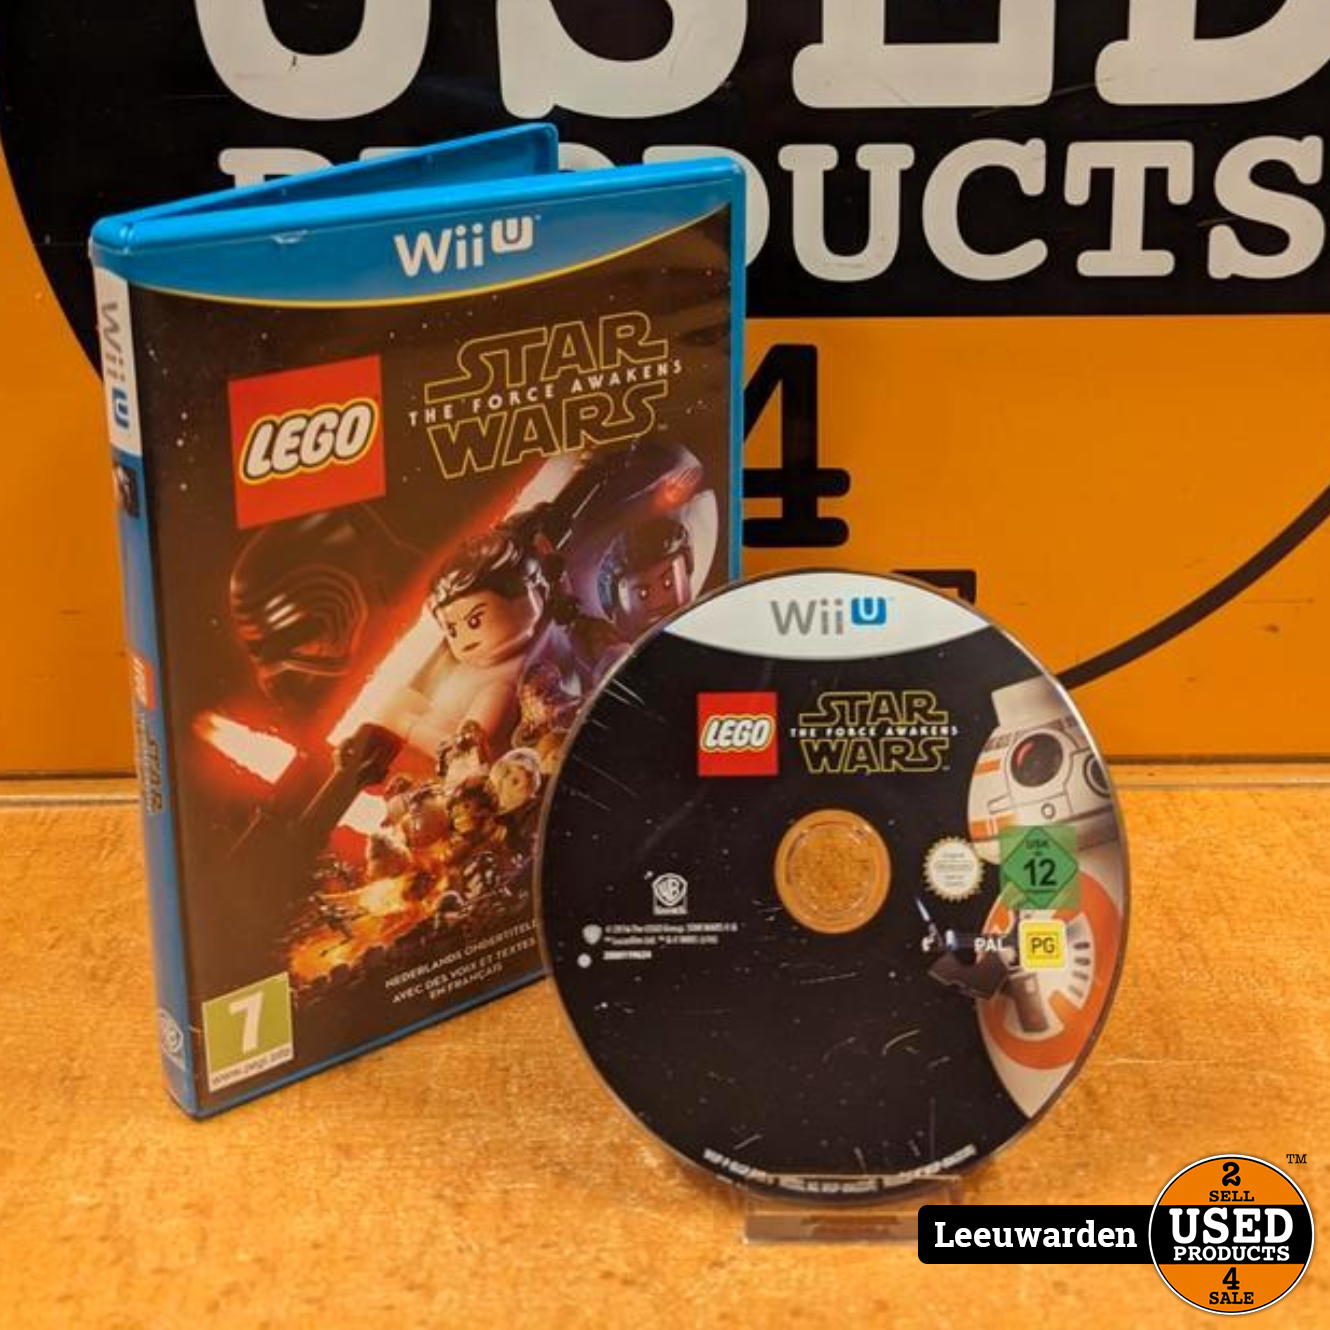 Reflectie tiener pik Nintendo WiiU - LEGO Star Wars The Force Awakens - Used Products Leeuwarden